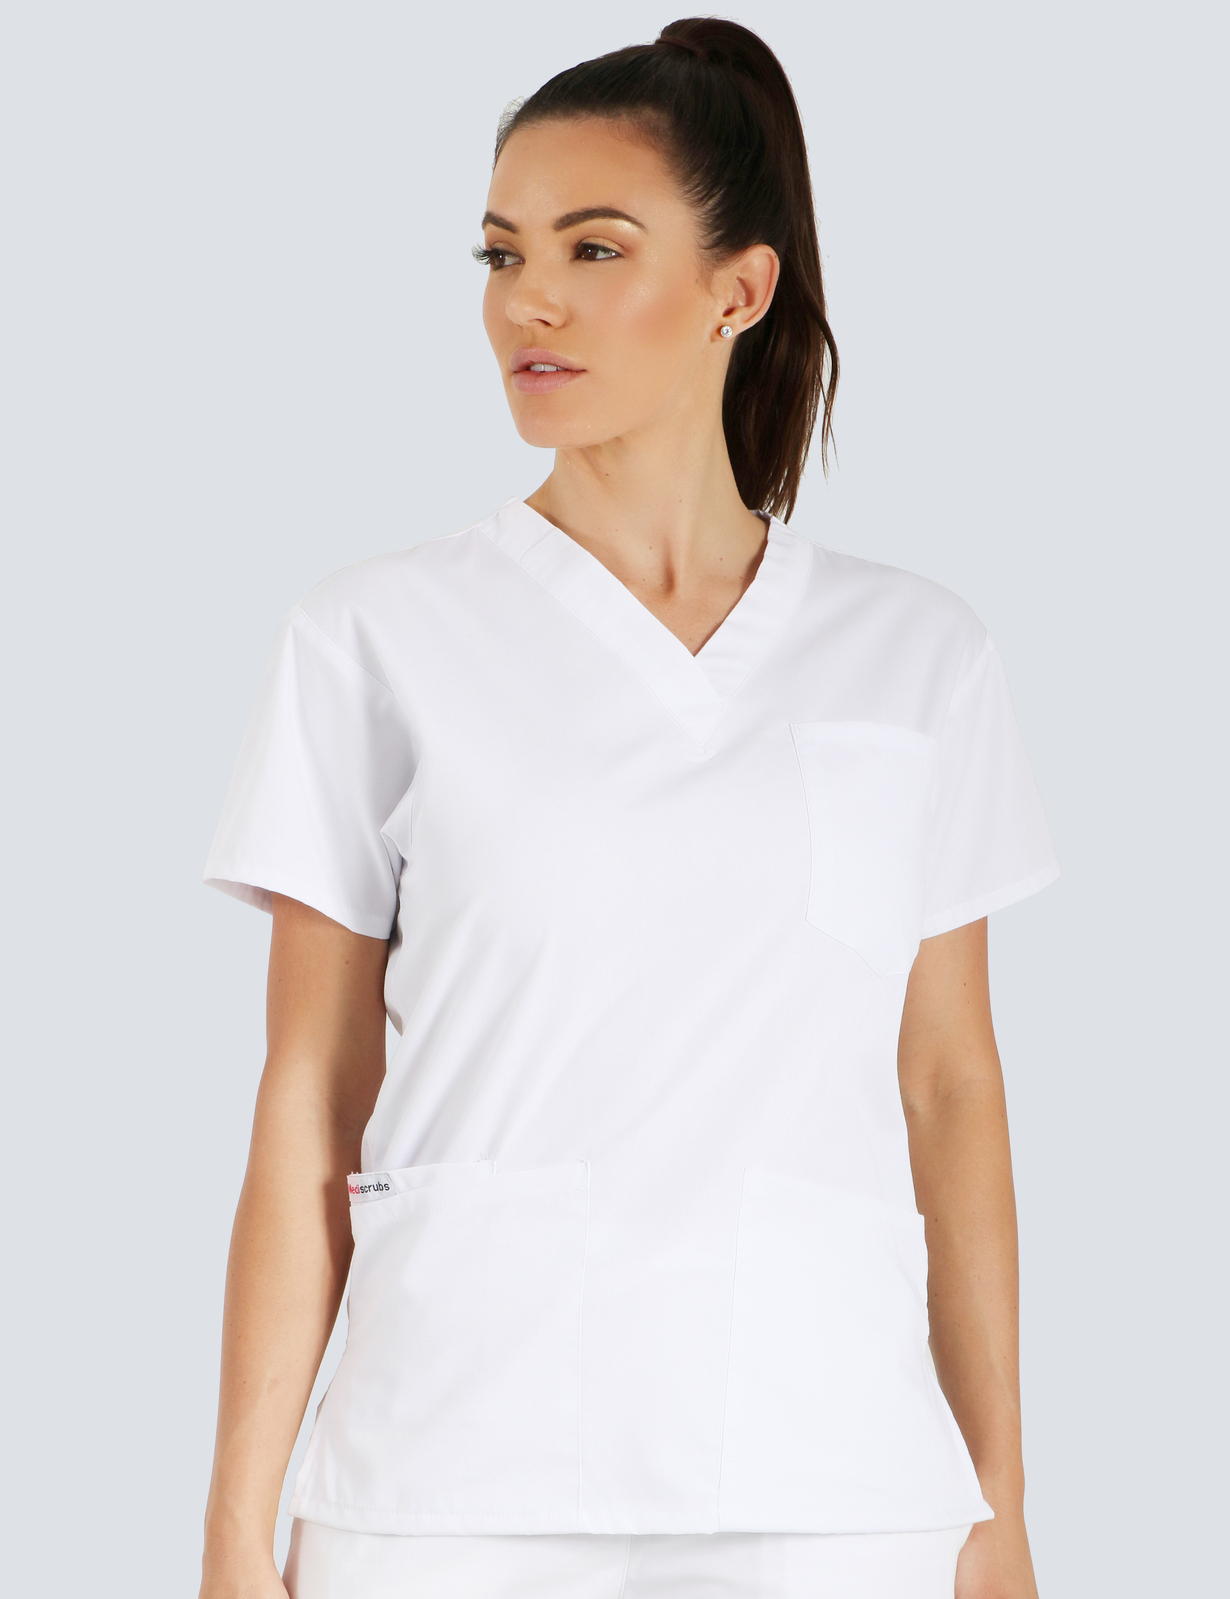 Queensland Children's Hospital Emergency Department Assistant in Nursing  Uniform Top Bundle  (4 Pocket Top in White incl Logos)